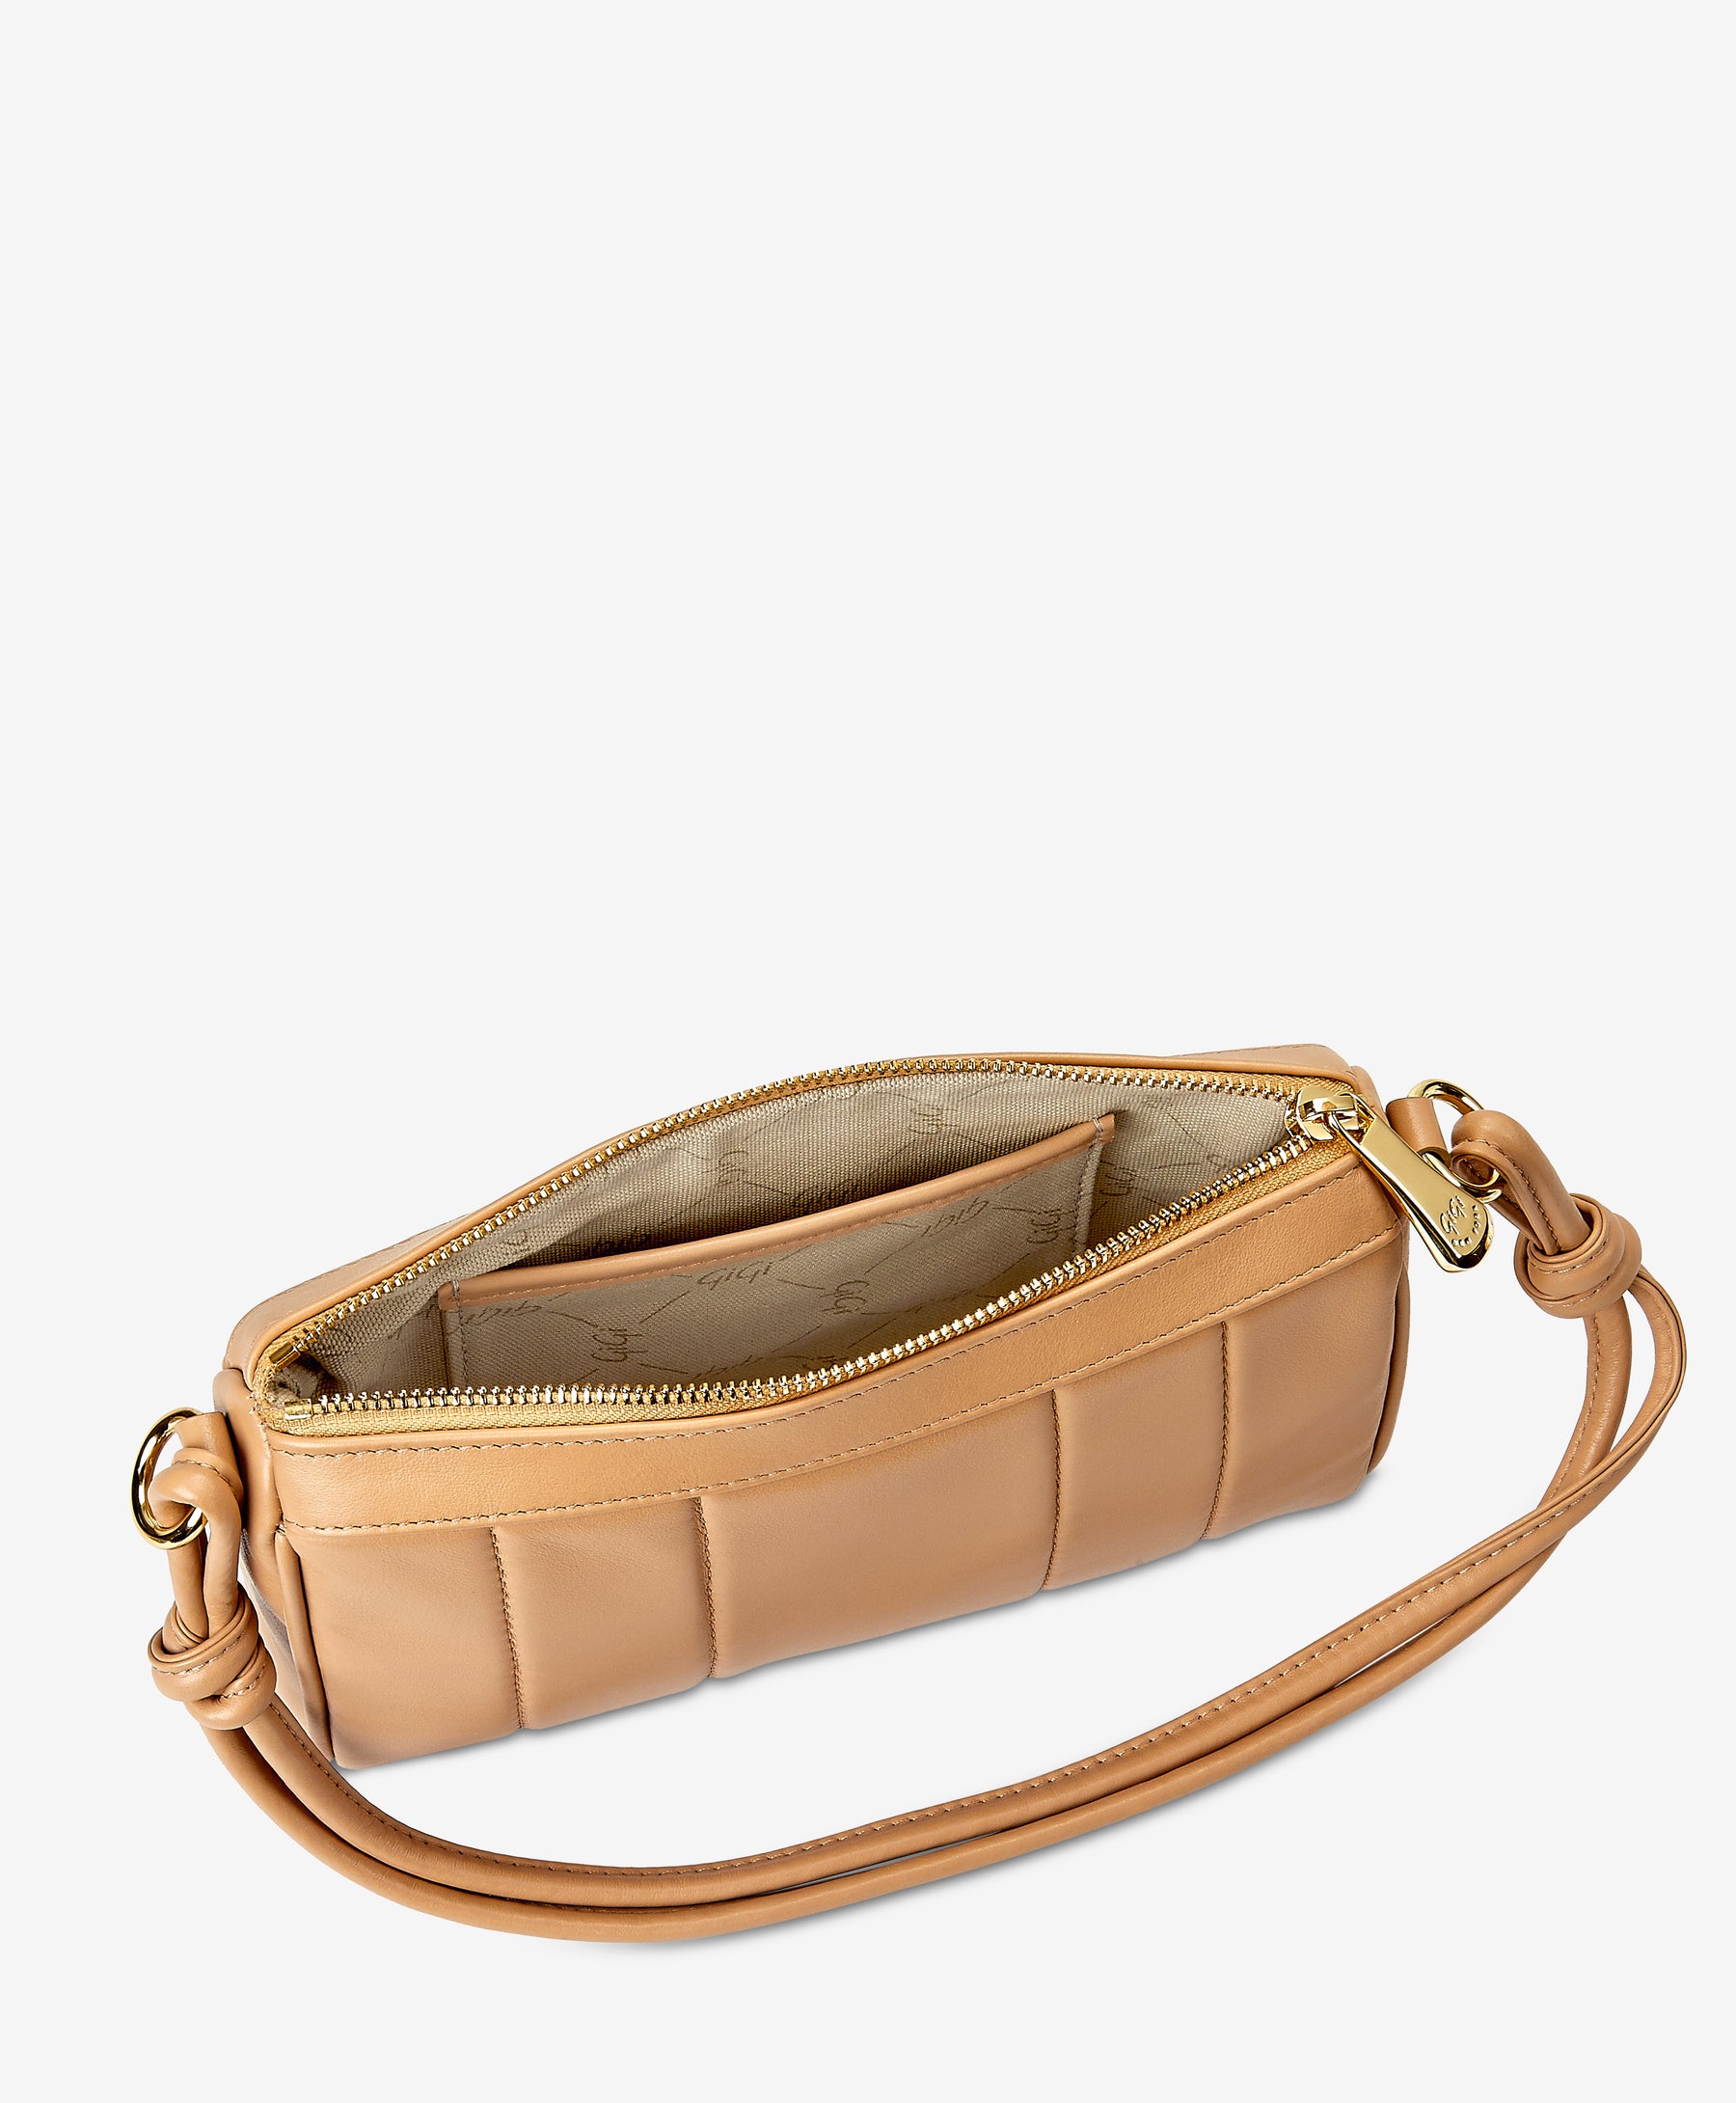 Handmade Leather Bags | Designer Leather Handbags – Page 3